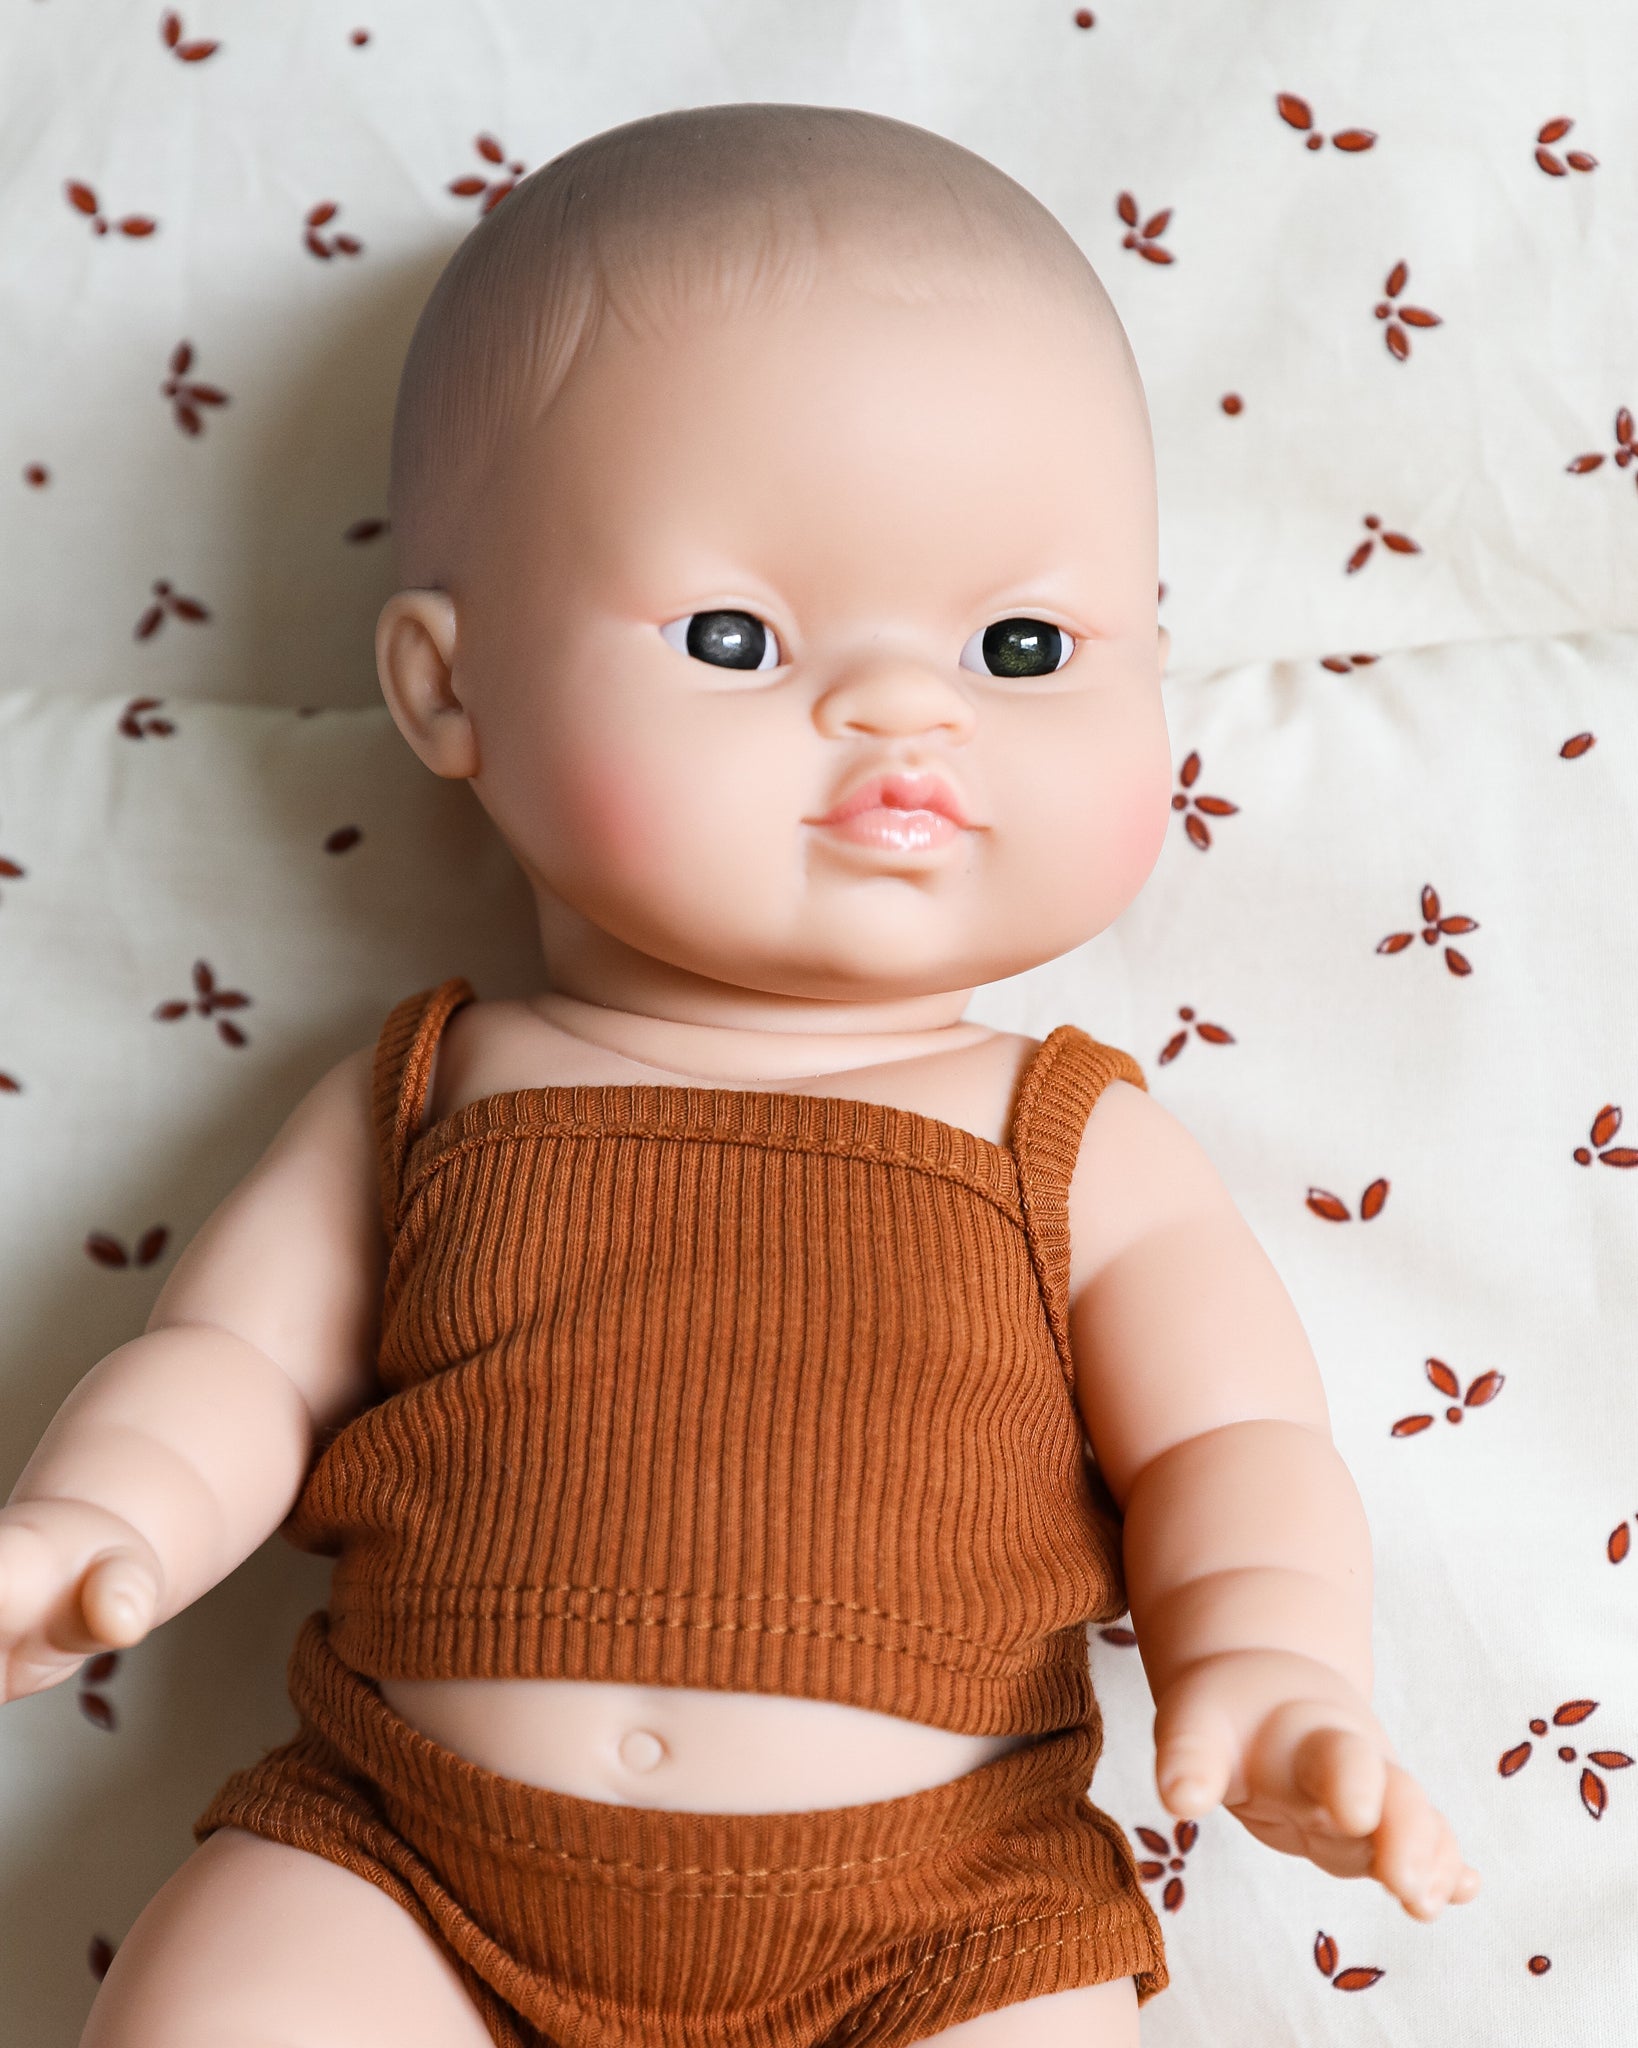 Minikane Doll - Asian Baby Girl Doll